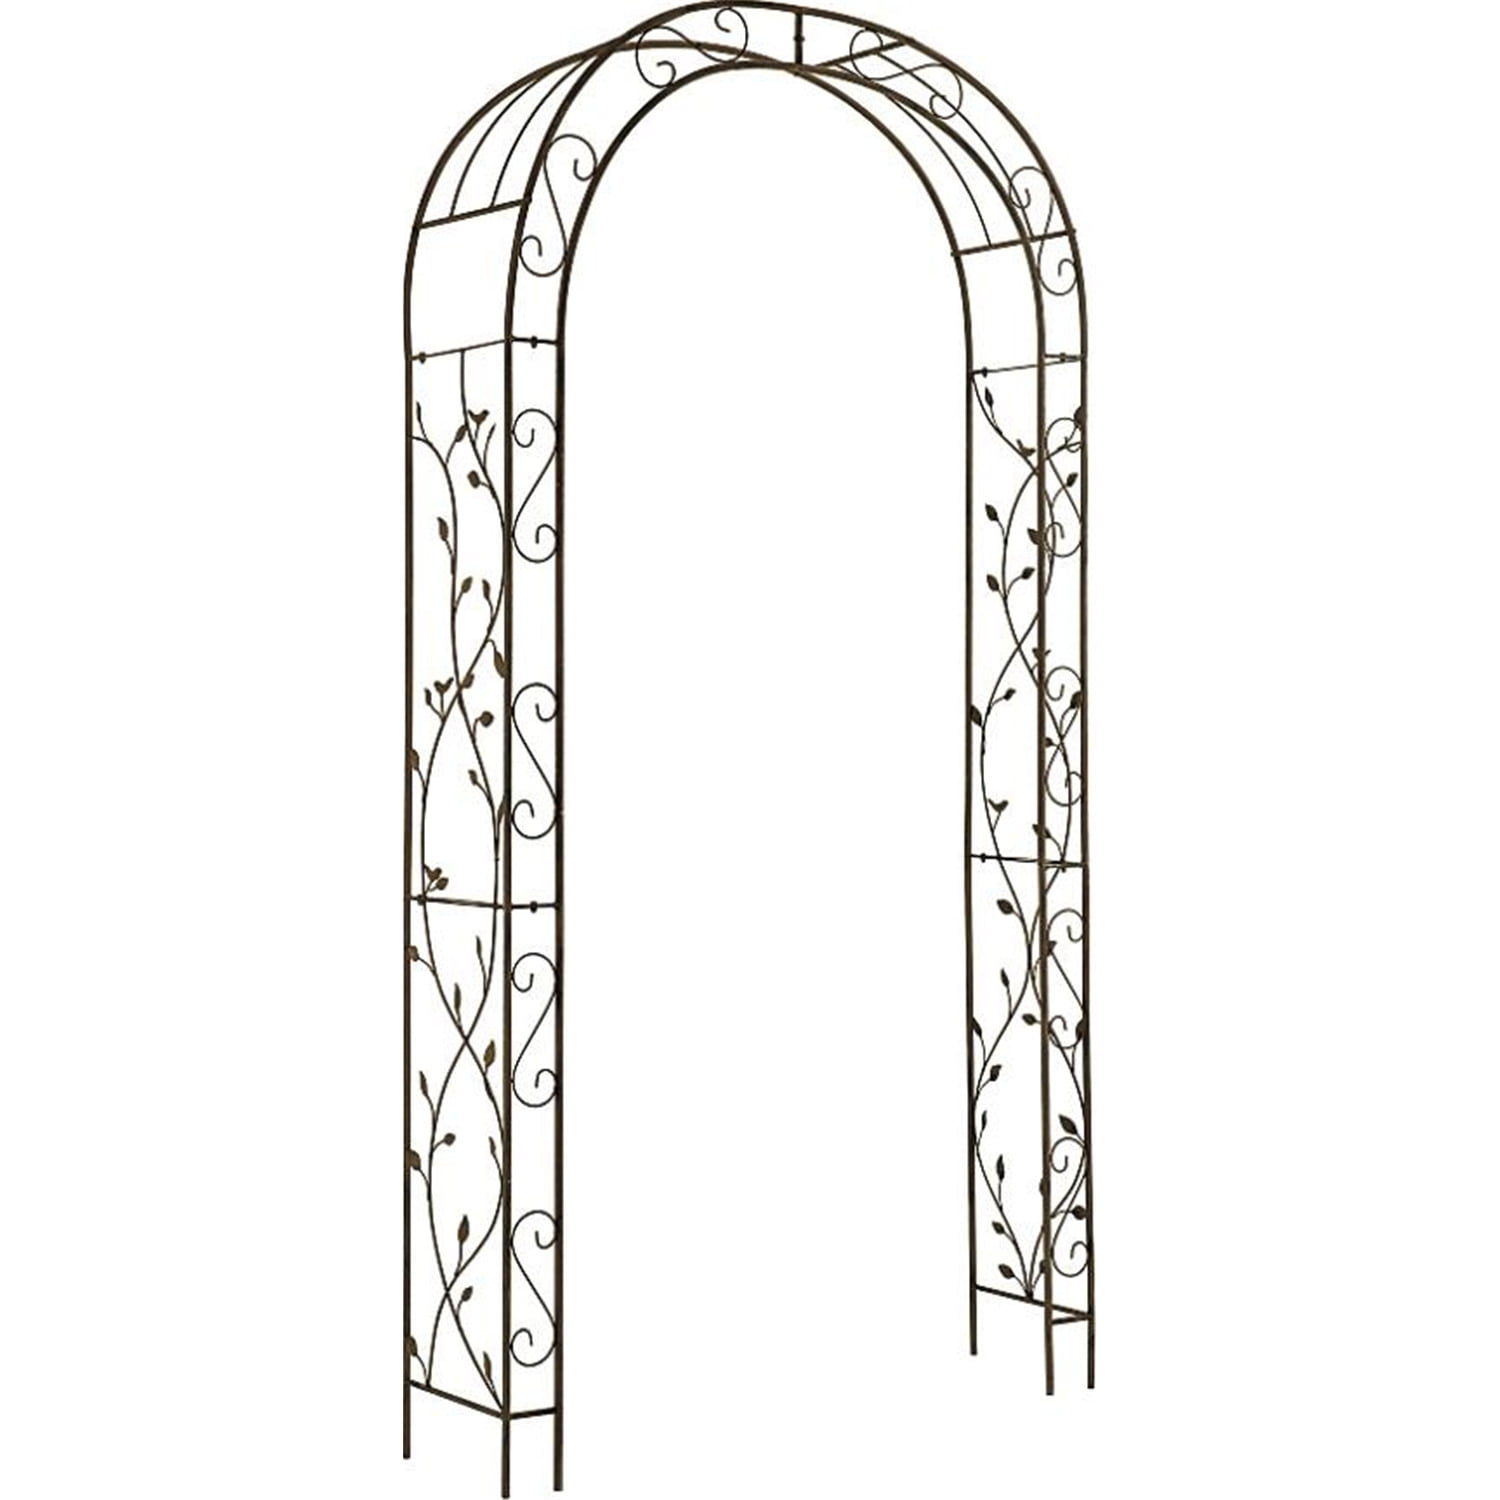 Gardman Loire Decorative Iron Metal Garden Arch Signature Collection 00535